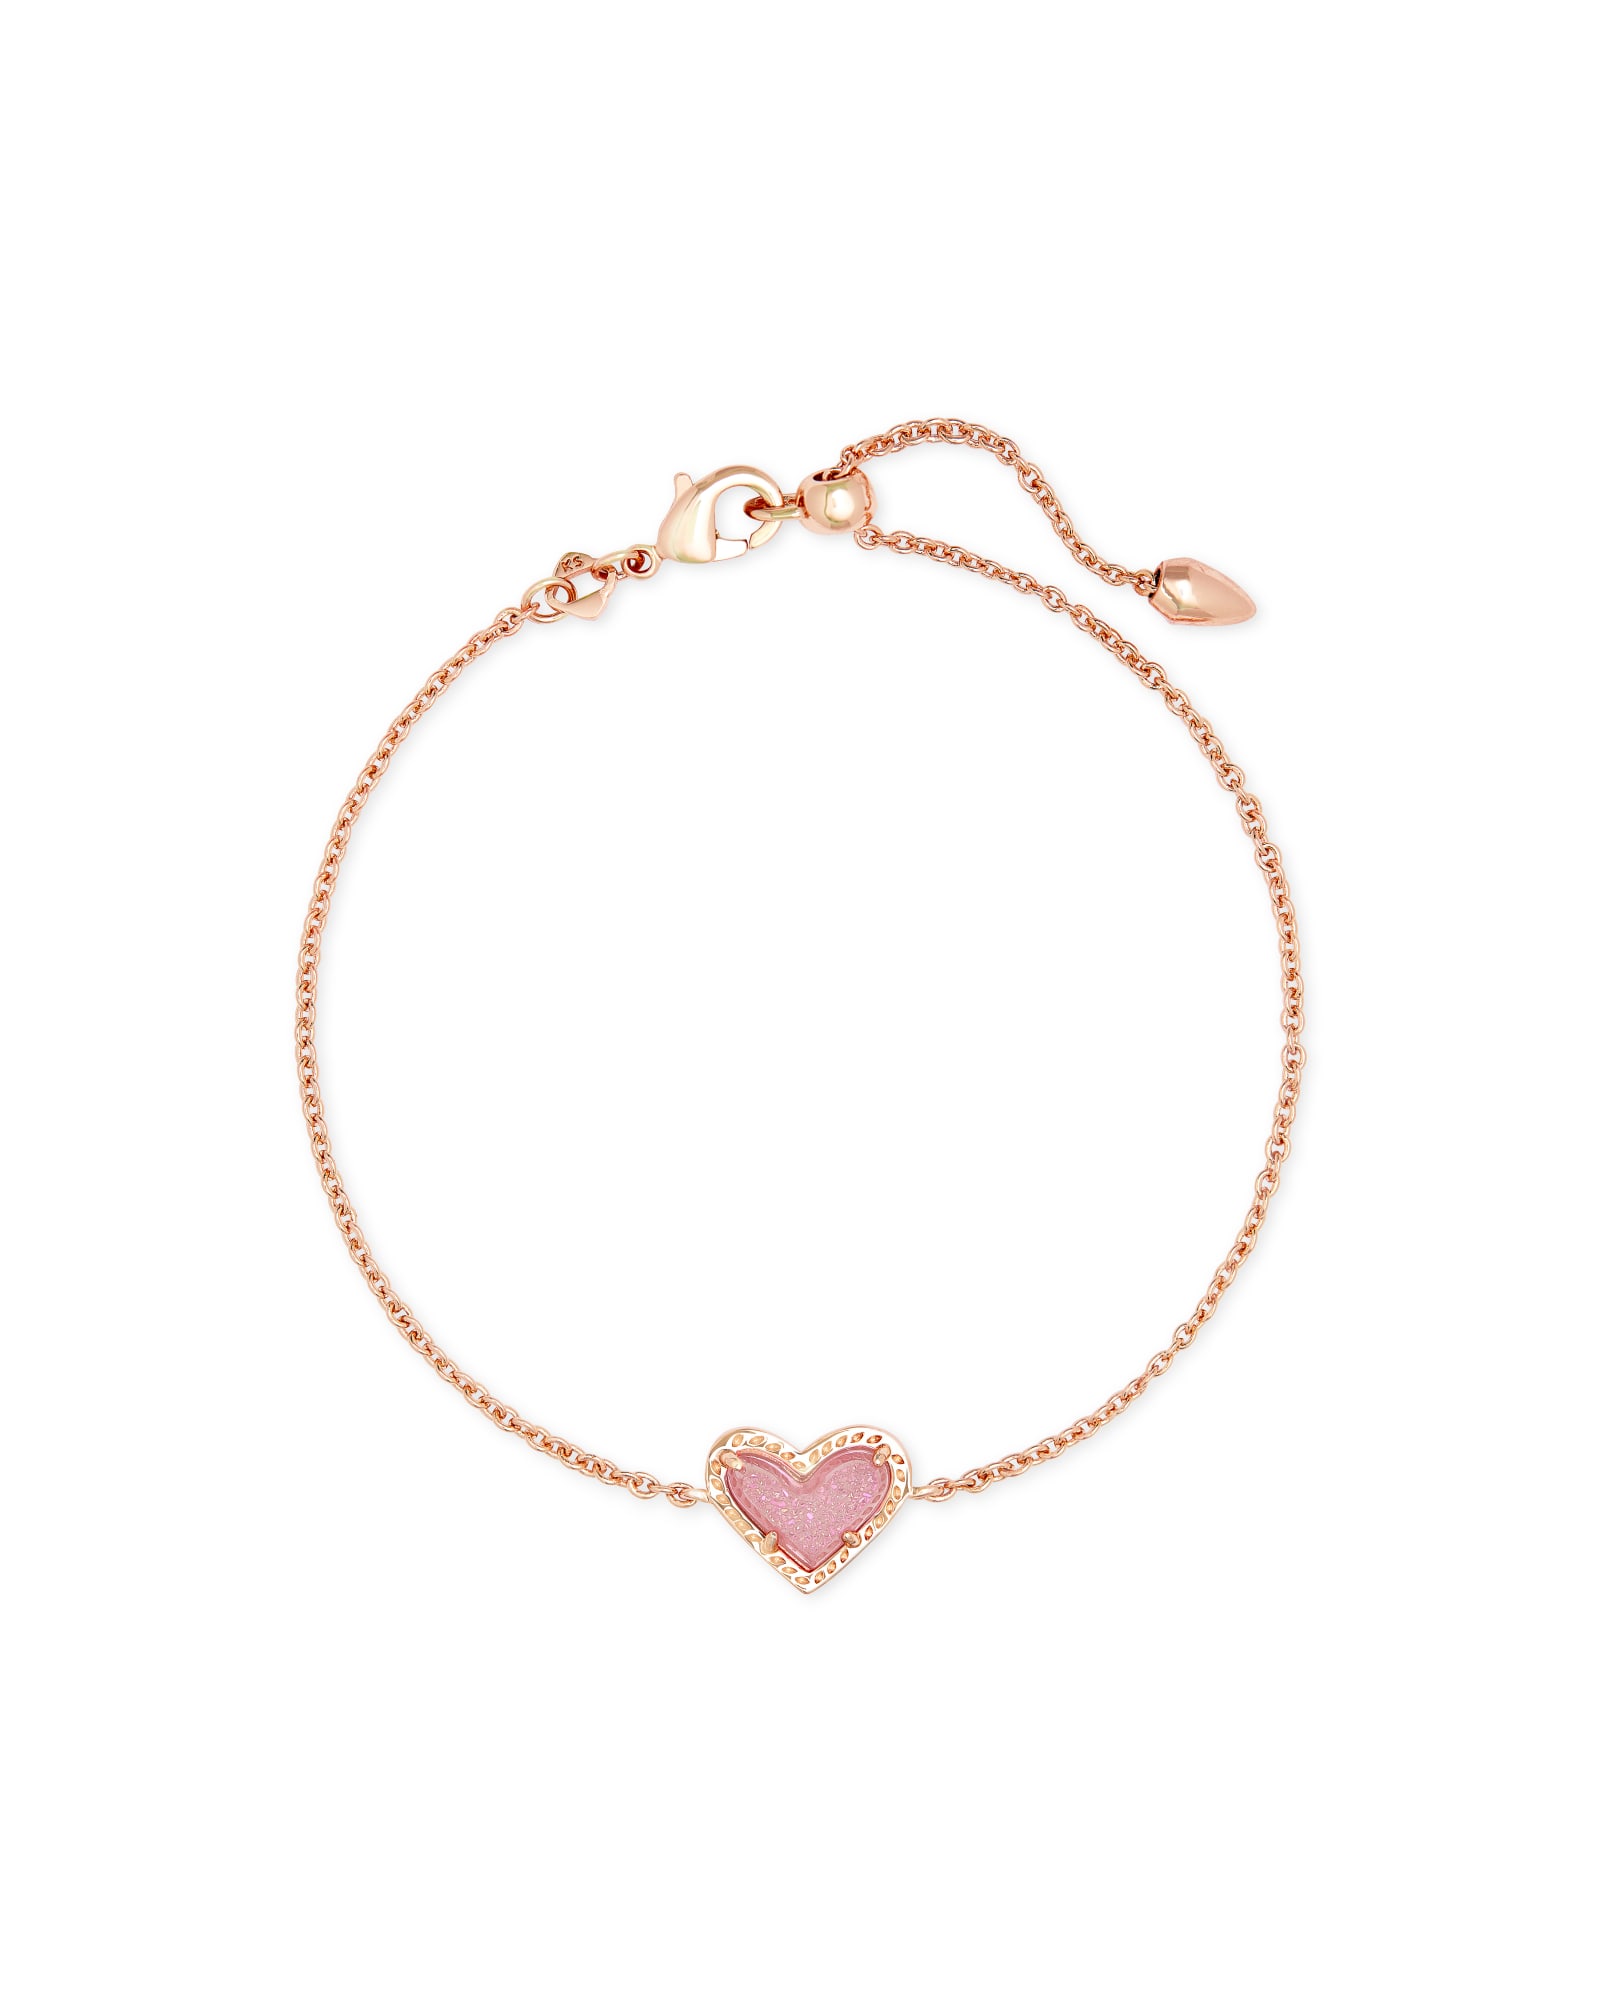 Ari Heart Rose Gold Chain Bracelet in Light Pink Drusy | Kendra Scott